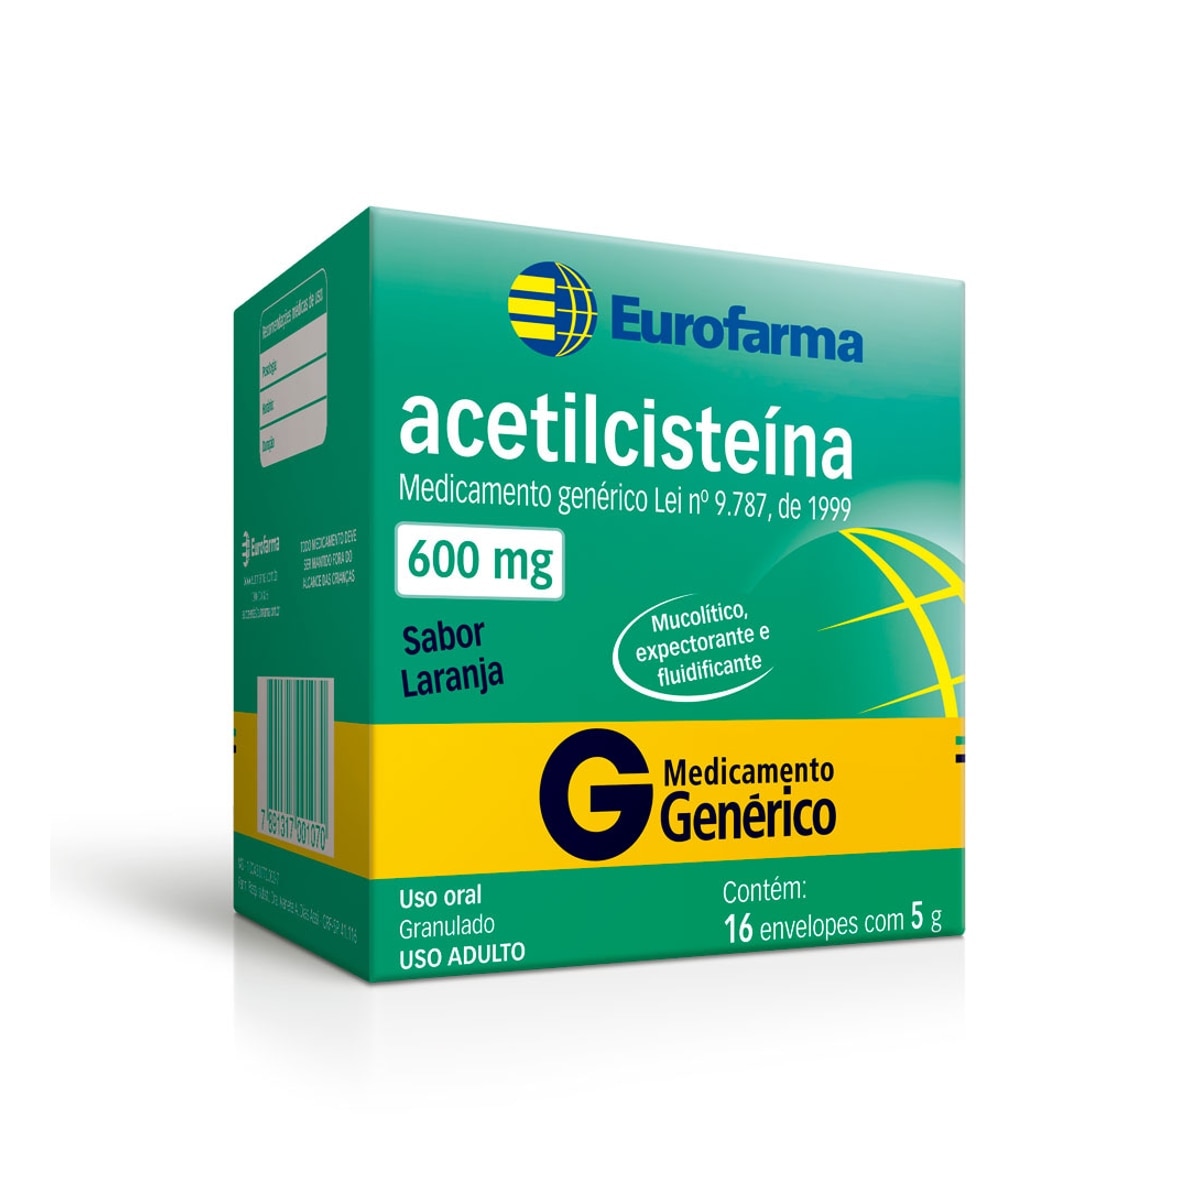 Acetilcisteina 600mg Sabor Laranja 16 Envelopes Eurofarma Generico